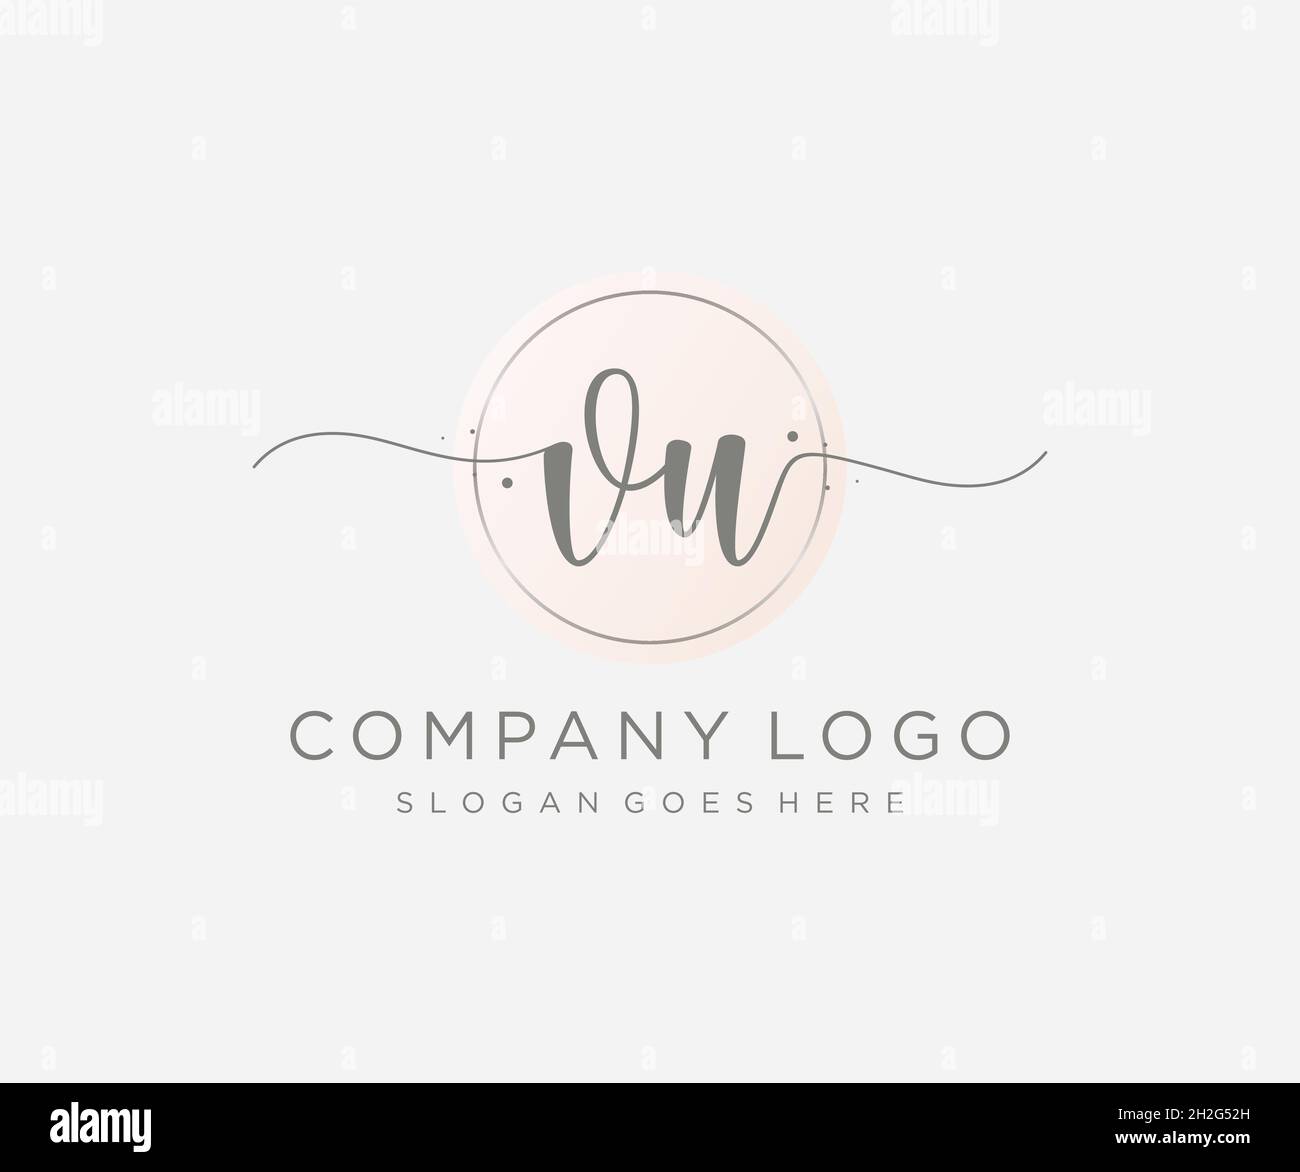 VU feminine logo. Usable for Nature, Salon, Spa, Cosmetic and Beauty Logos. Flat Vector Logo Design Template Element. Stock Vector